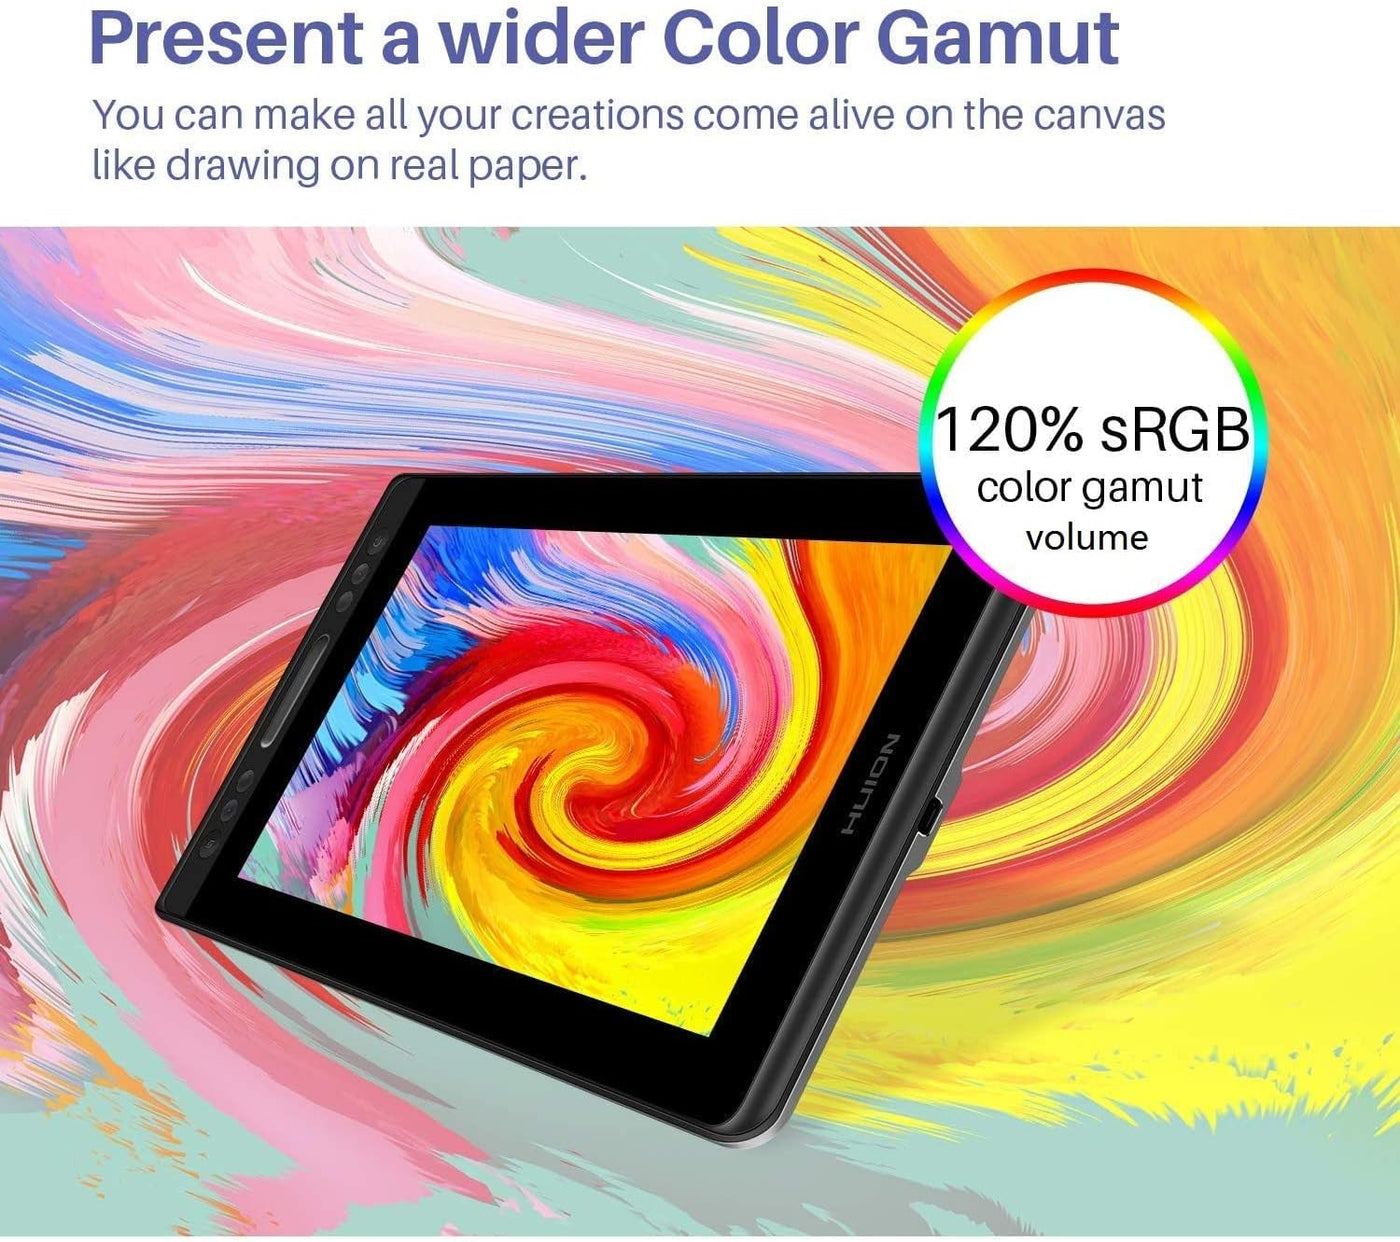 HUION KAMVAS Pro 13 Graphics Drawing Tablet, 13.3inch Pen Display - $150